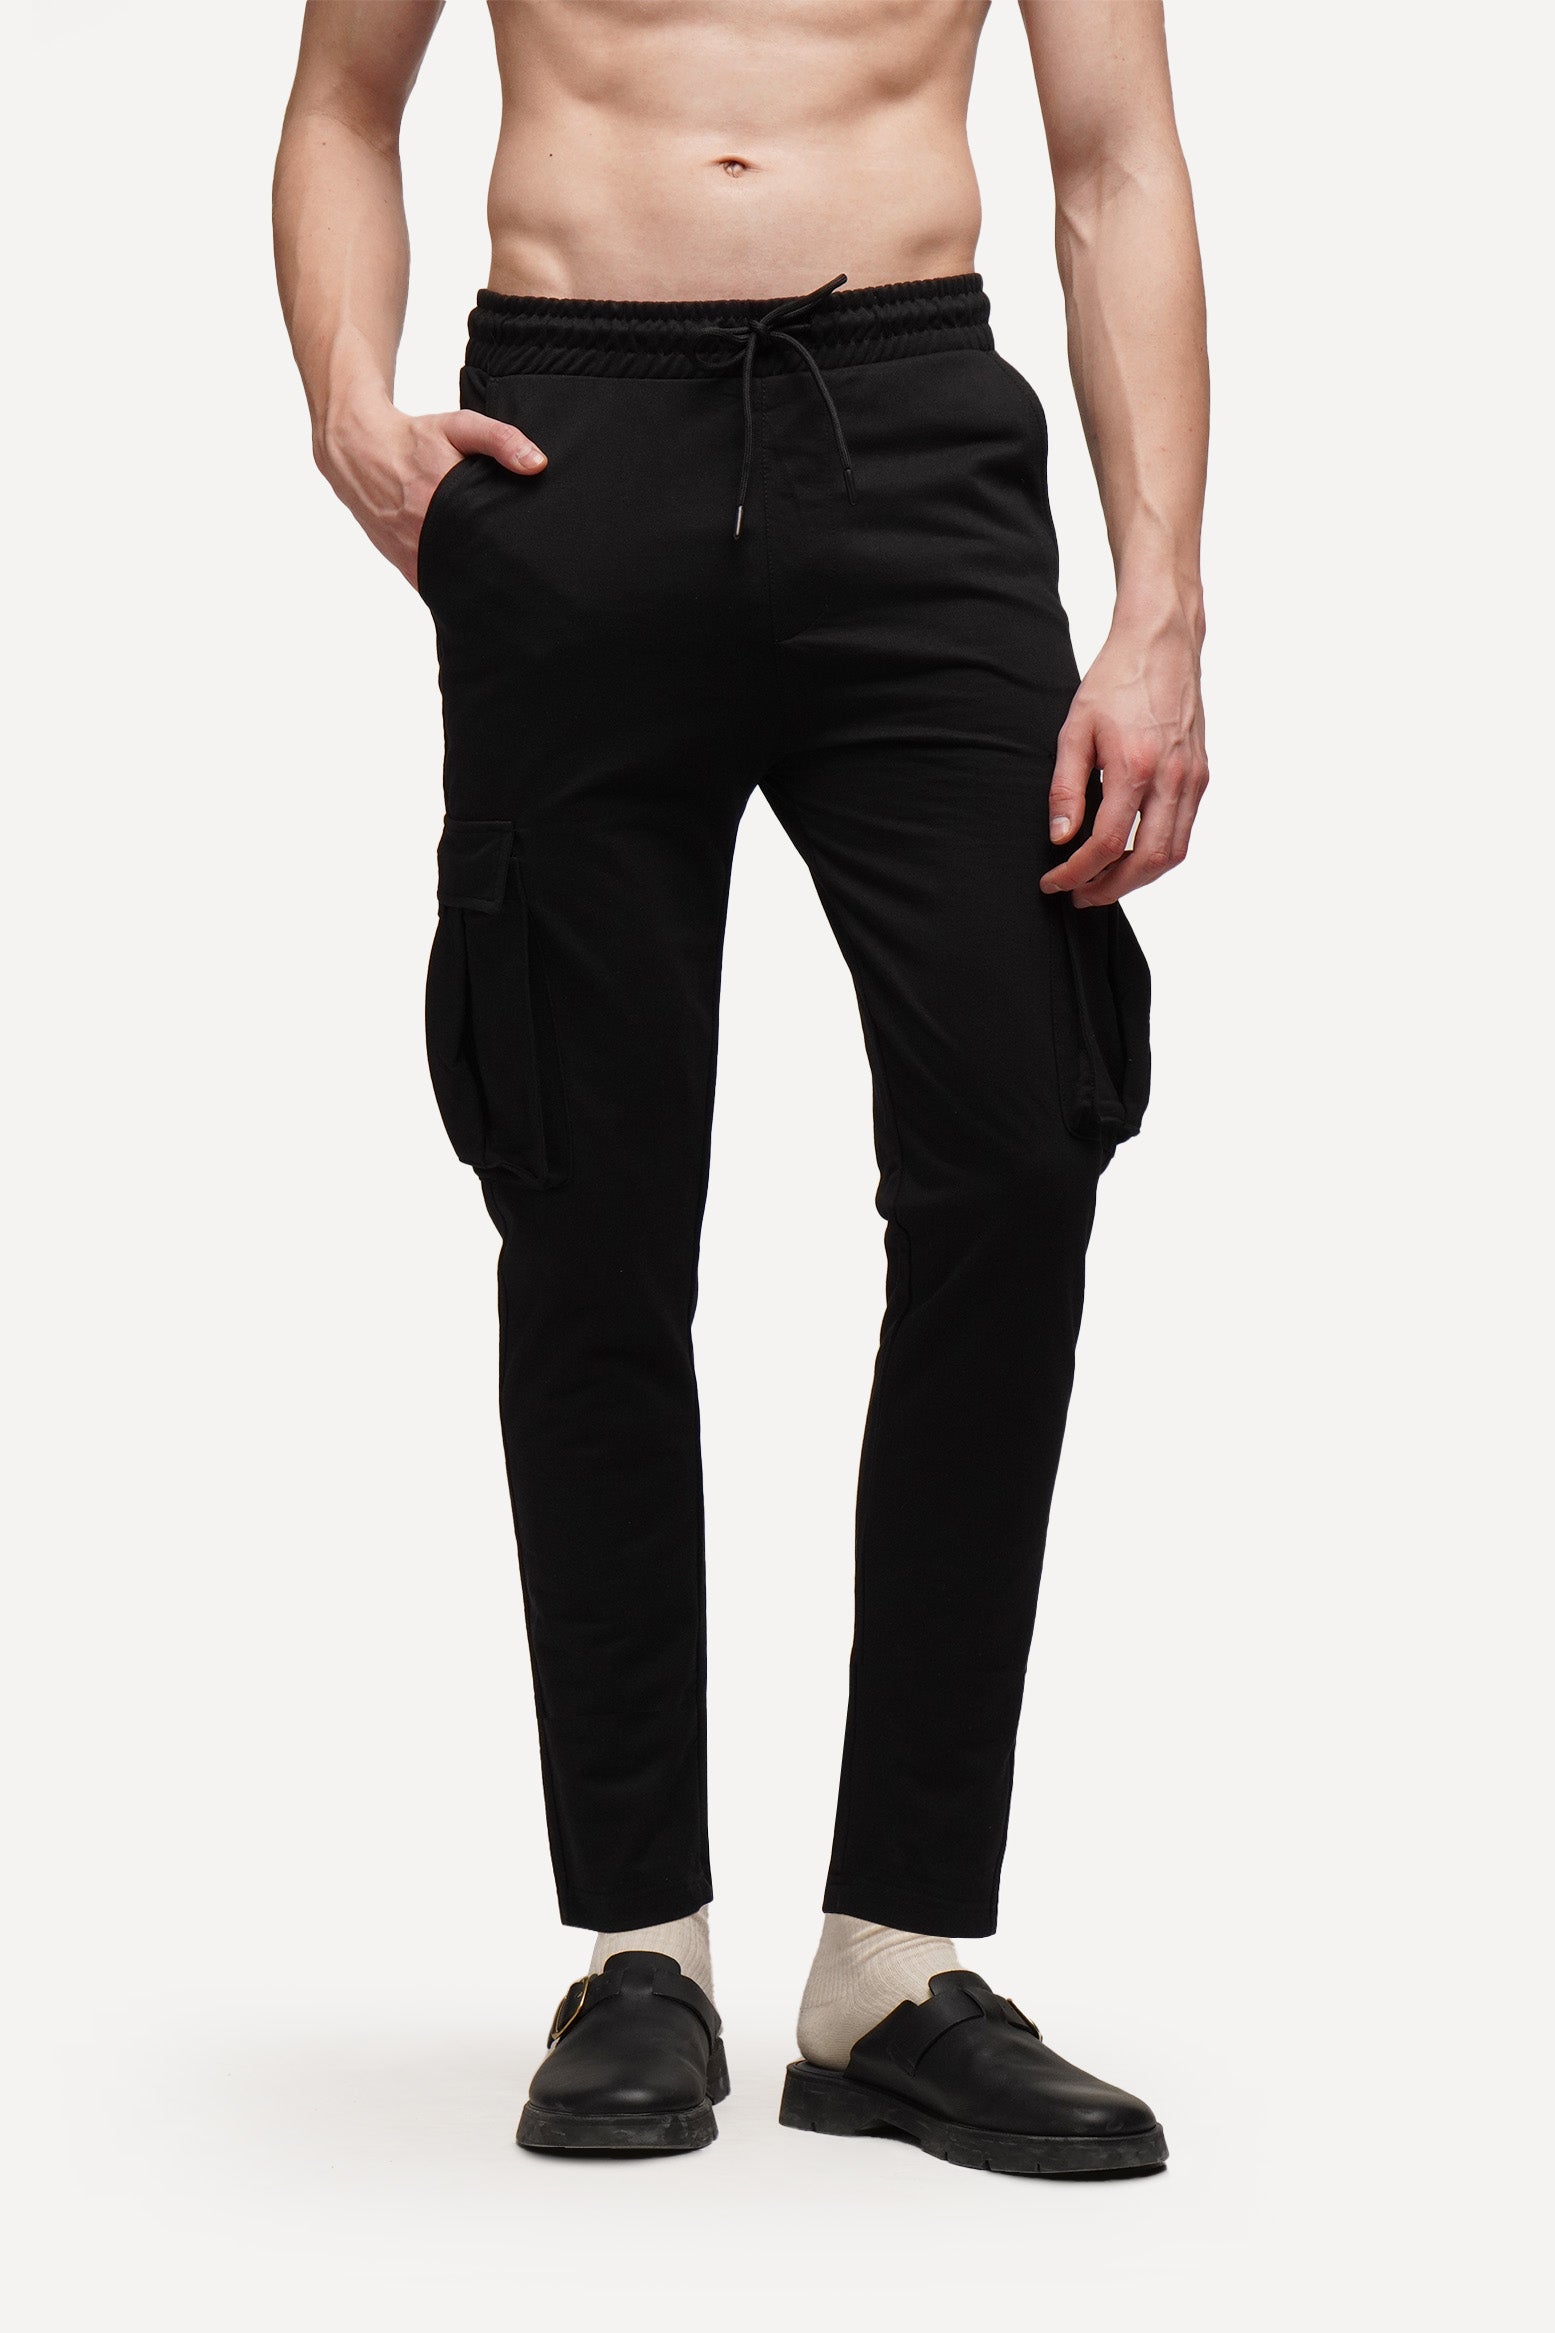 REGULAR FIT BLACK PREMIUM JOGGERS FOR MEN - Peplos Jeans – Peplos Jeans